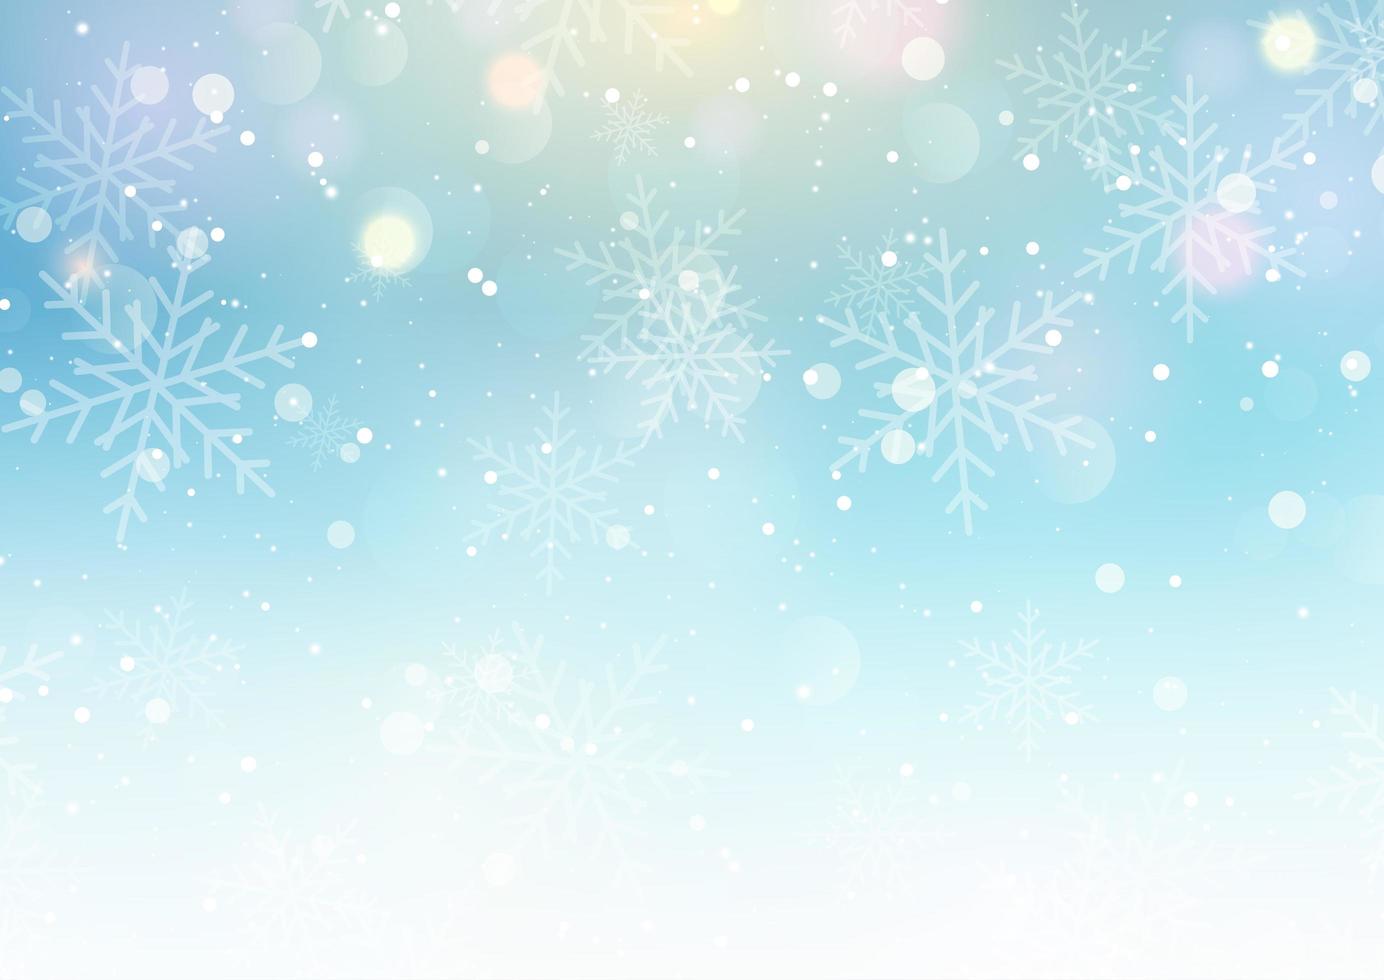 jul bokeh bakgrund med fallande snöflingor vektor